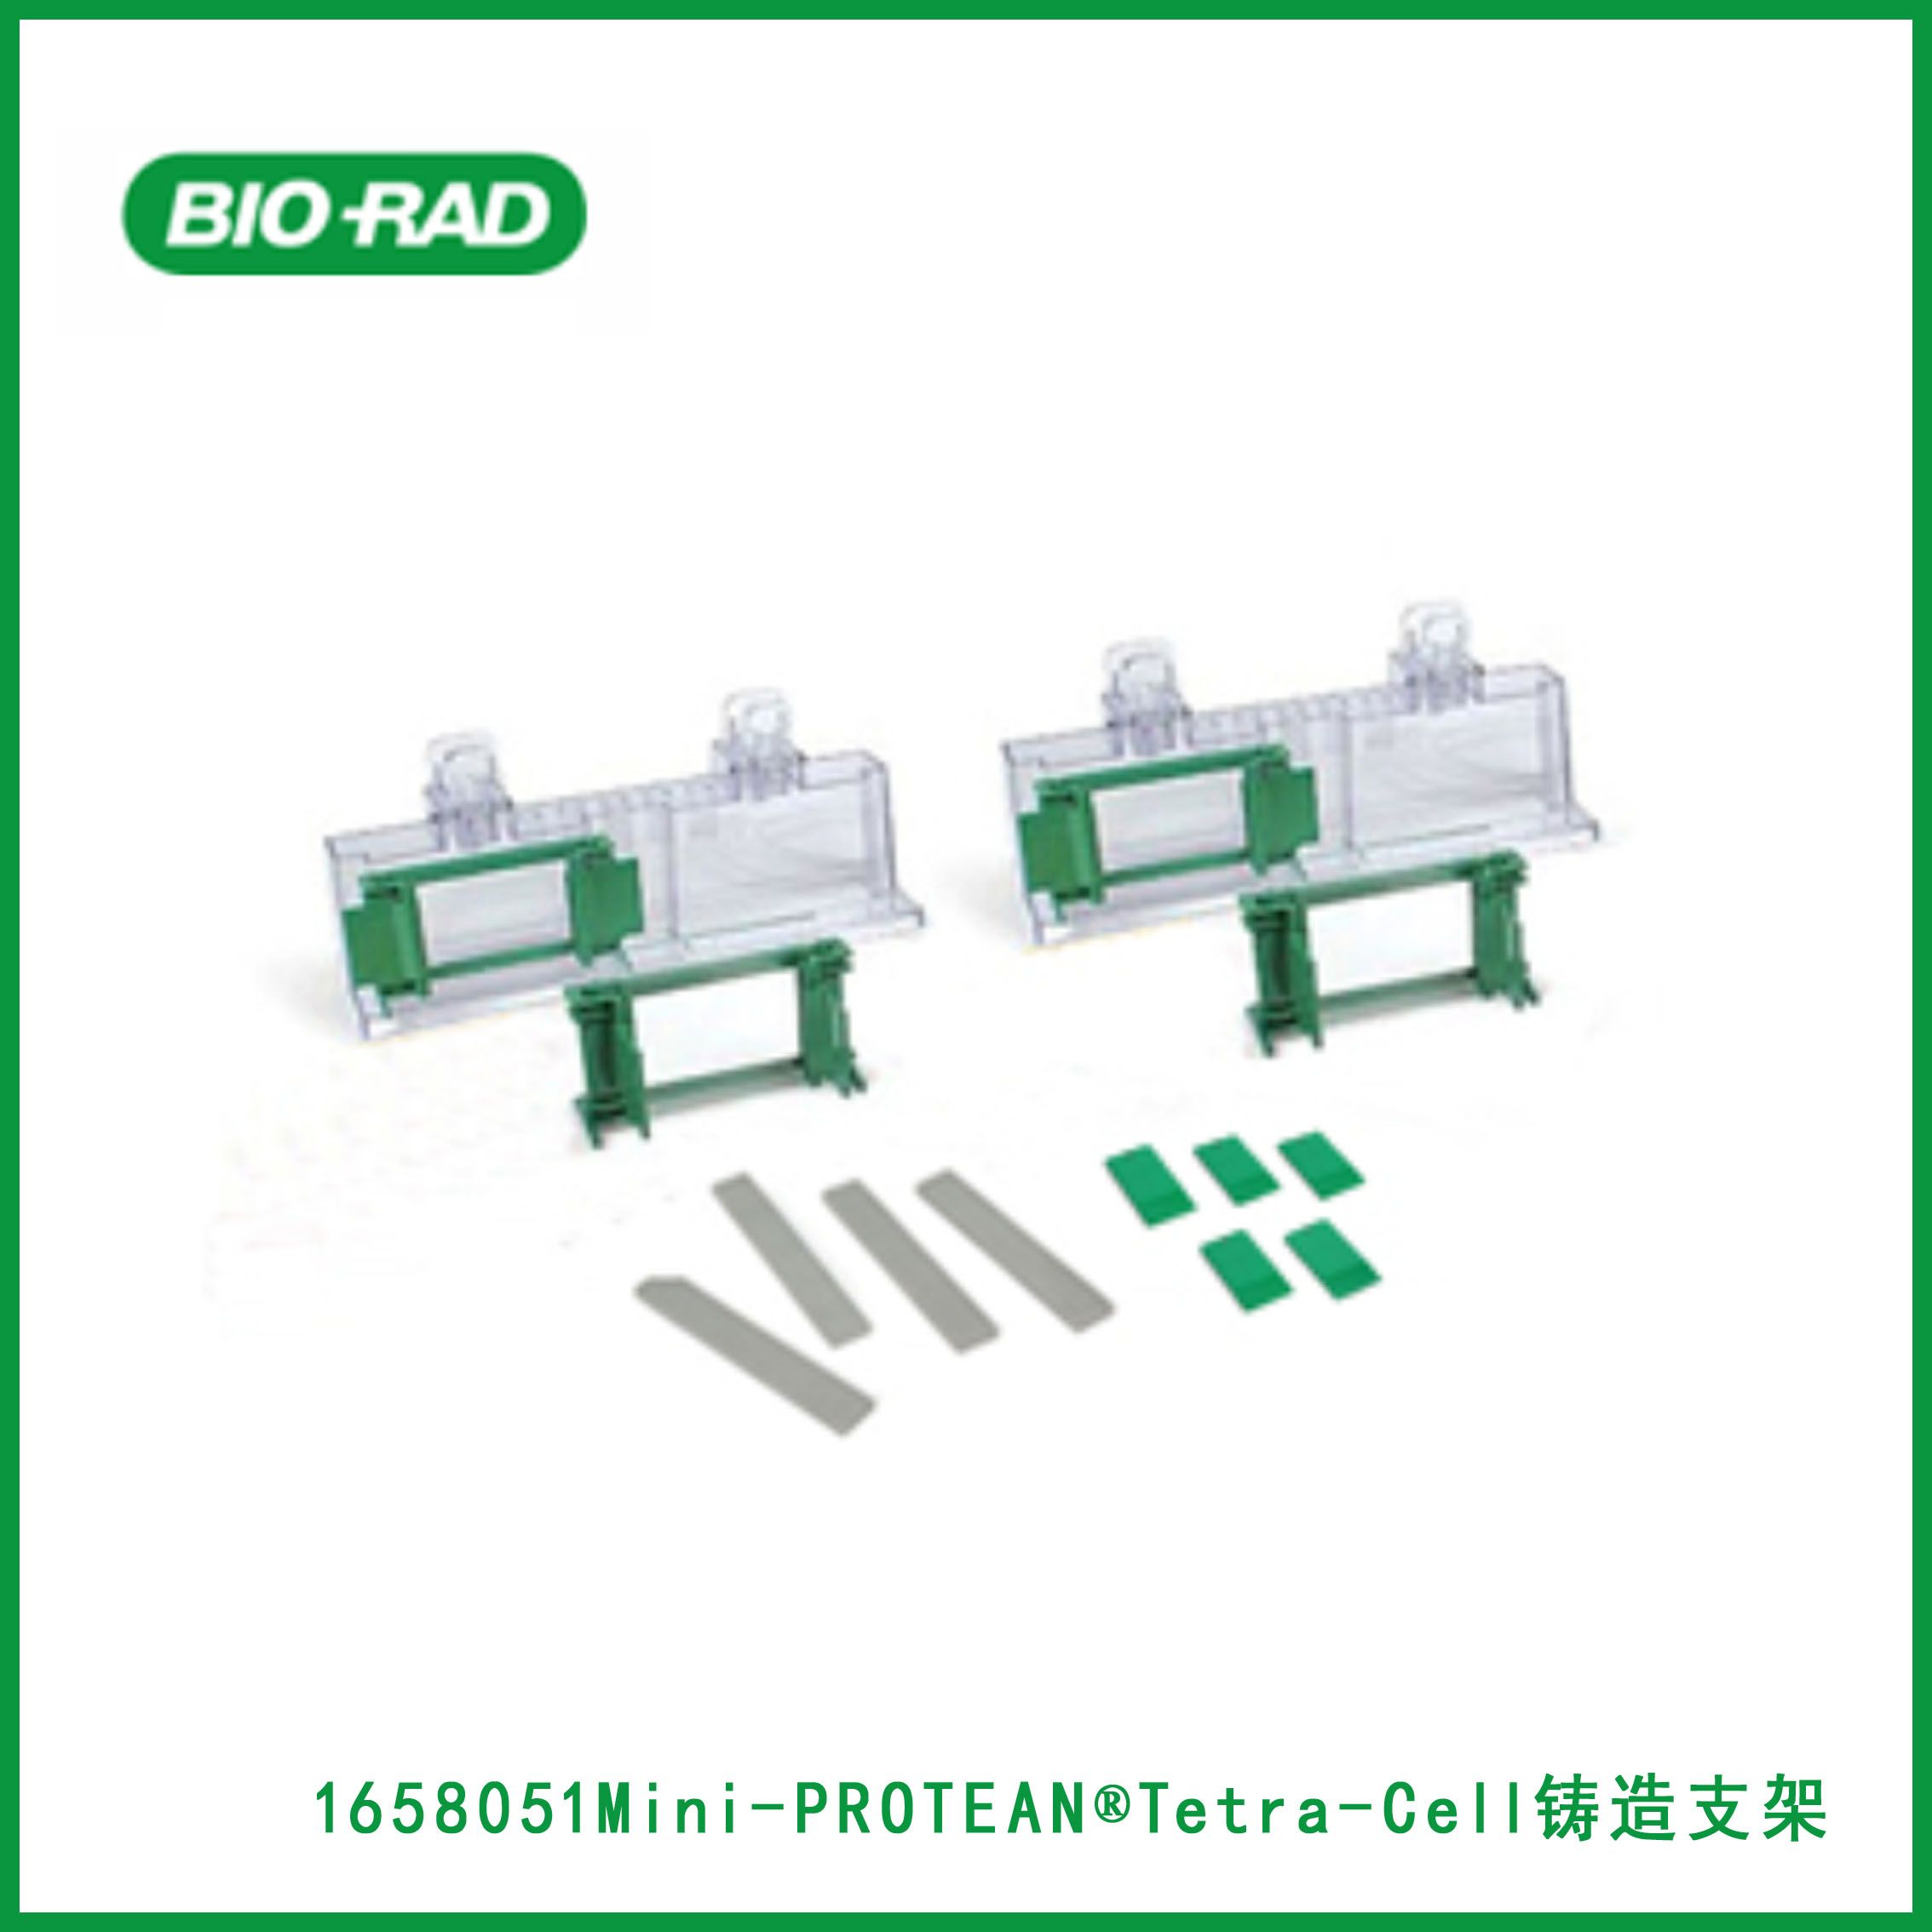 伯乐Bio-Rad1658051 Mini-PROTEAN® Tetra Cell Casting Stand with Clamp Kit for 2 Core System, Mini-PROTEAN®Tetra-Cell铸造支架，带夹钳套件，适用于2芯系统，现货